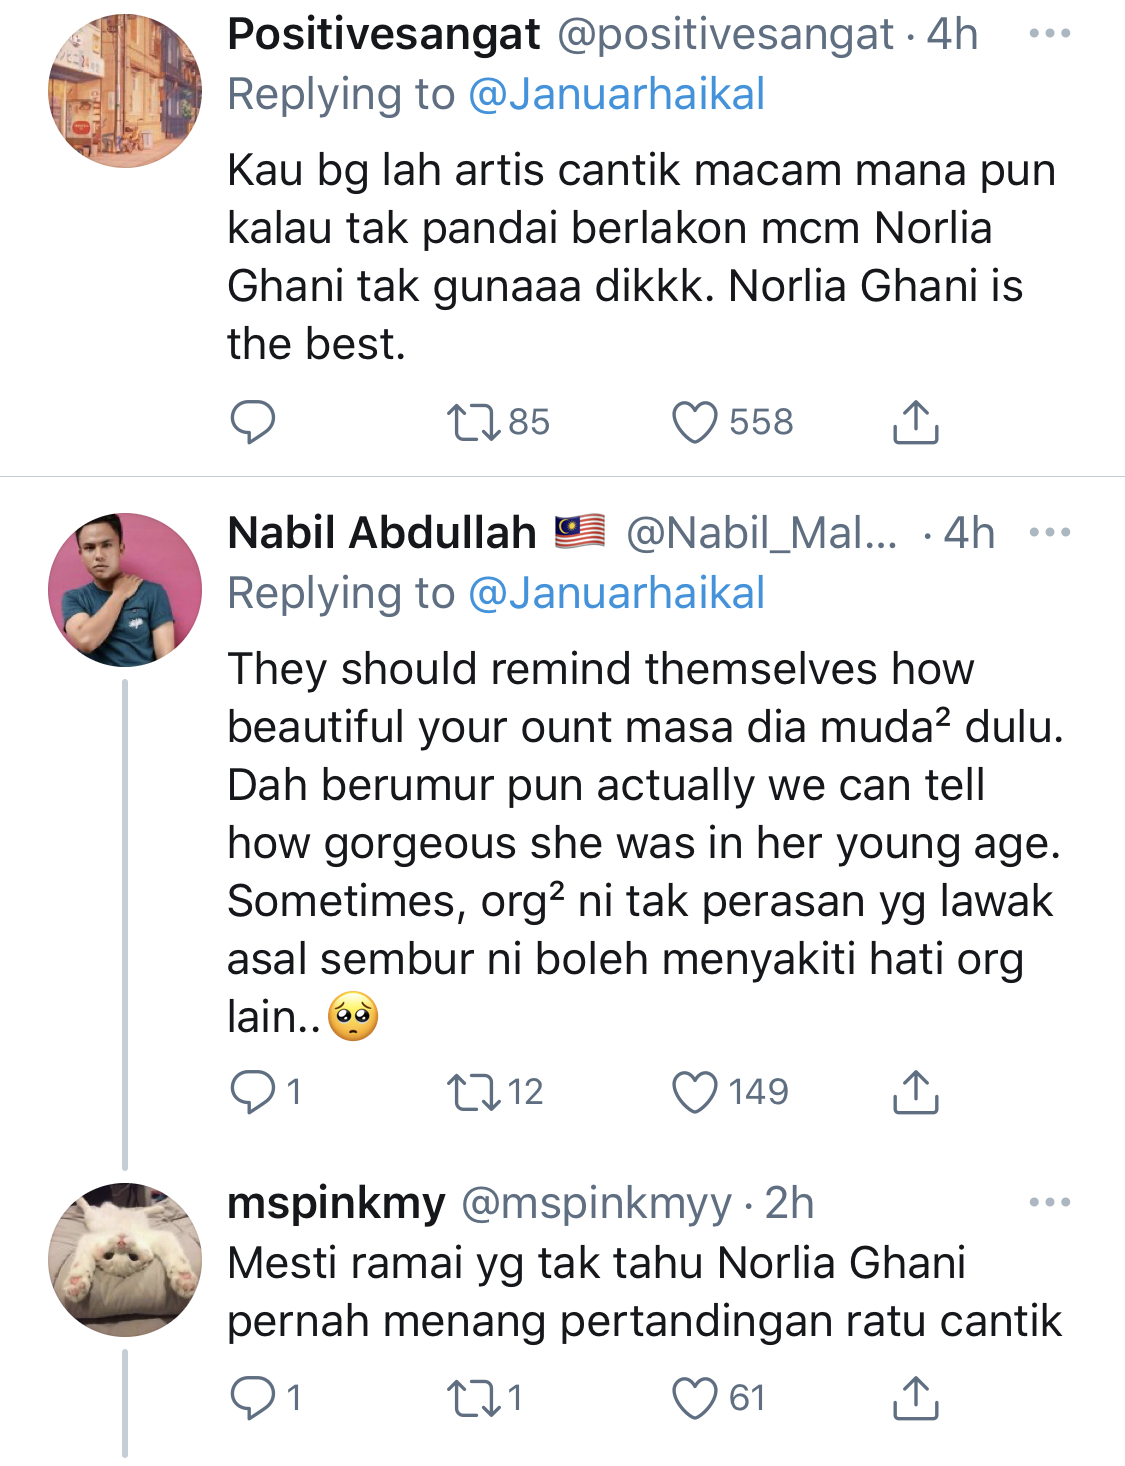 Ramai Kagum Wajah Awet Muda Kavita Sidhu Di Usia 49 Tahun, Tapi Nama Norlia Ghani Pula Trending Di Twitter Sebab&#8230;